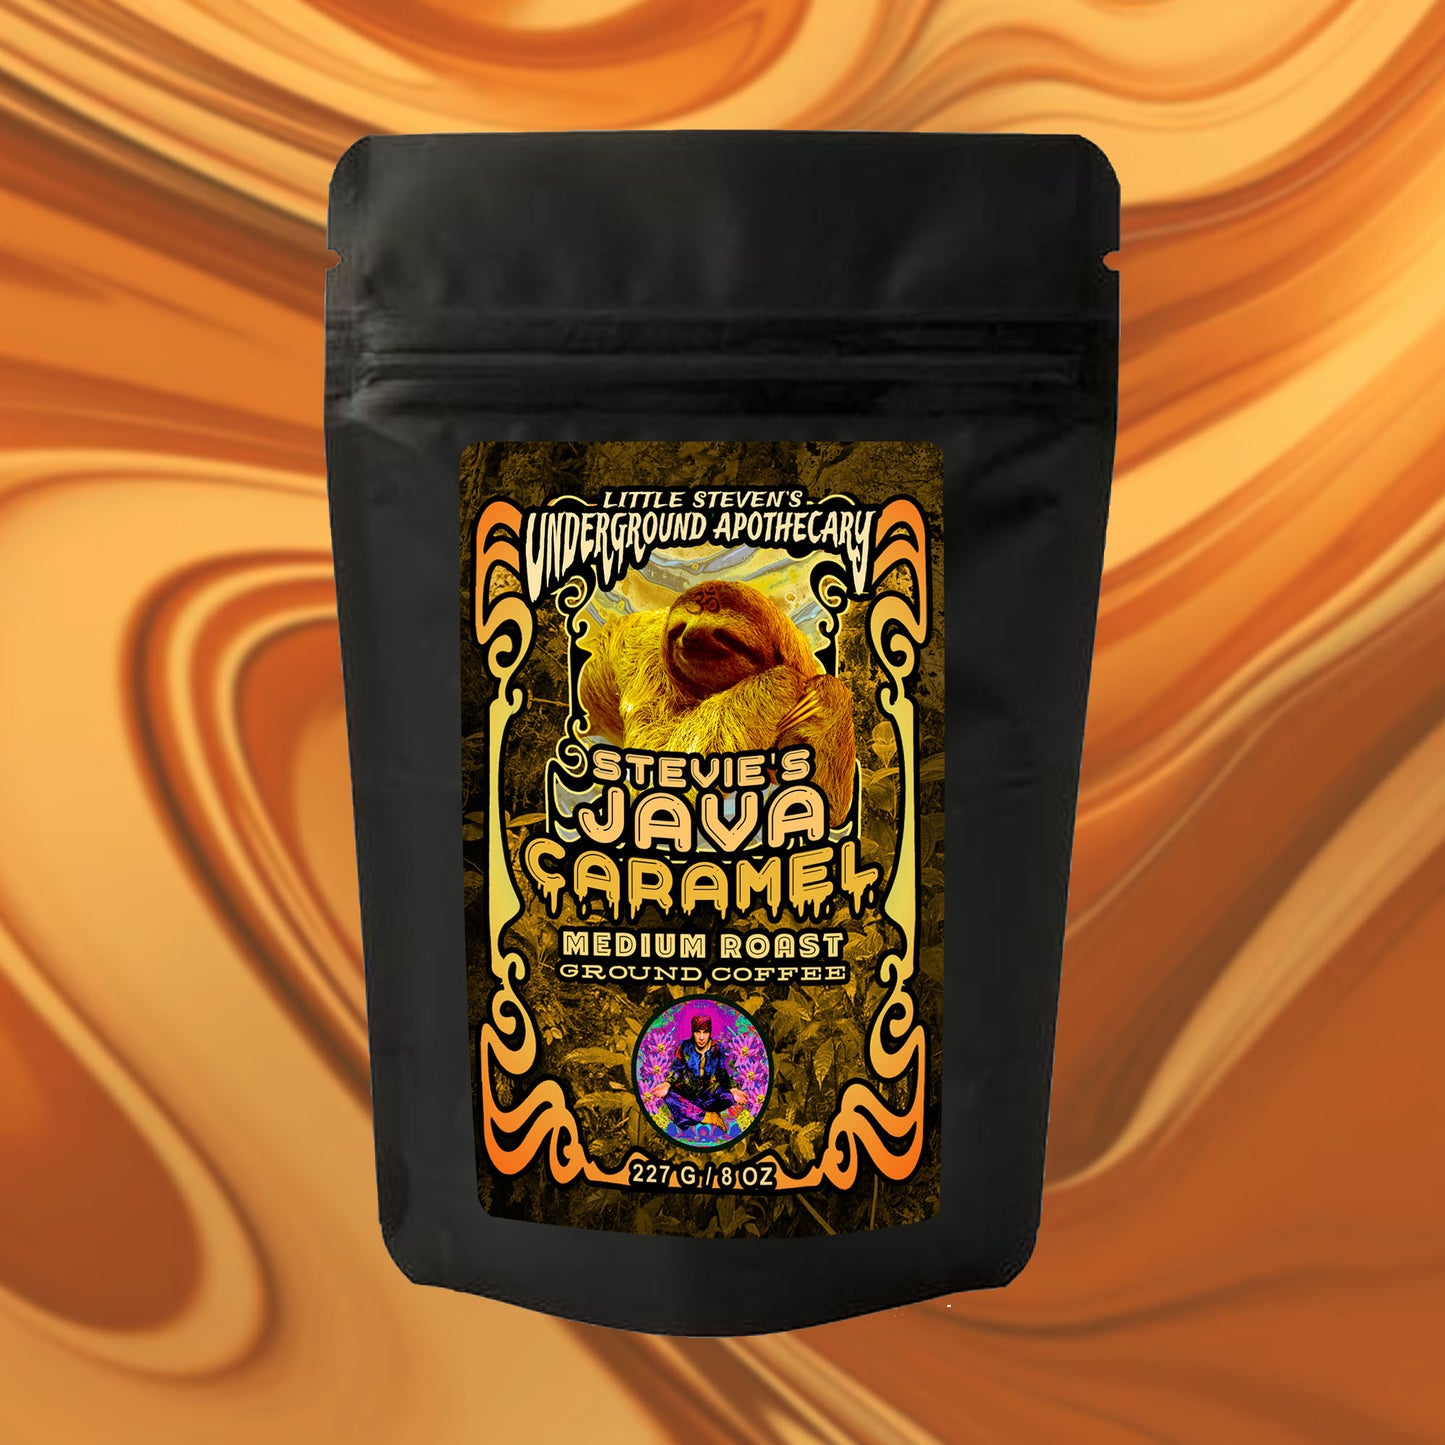 Stevie's Java Caramel Medium Roast Ground Coffee (8 OZ) - Wicked Cool Wellness